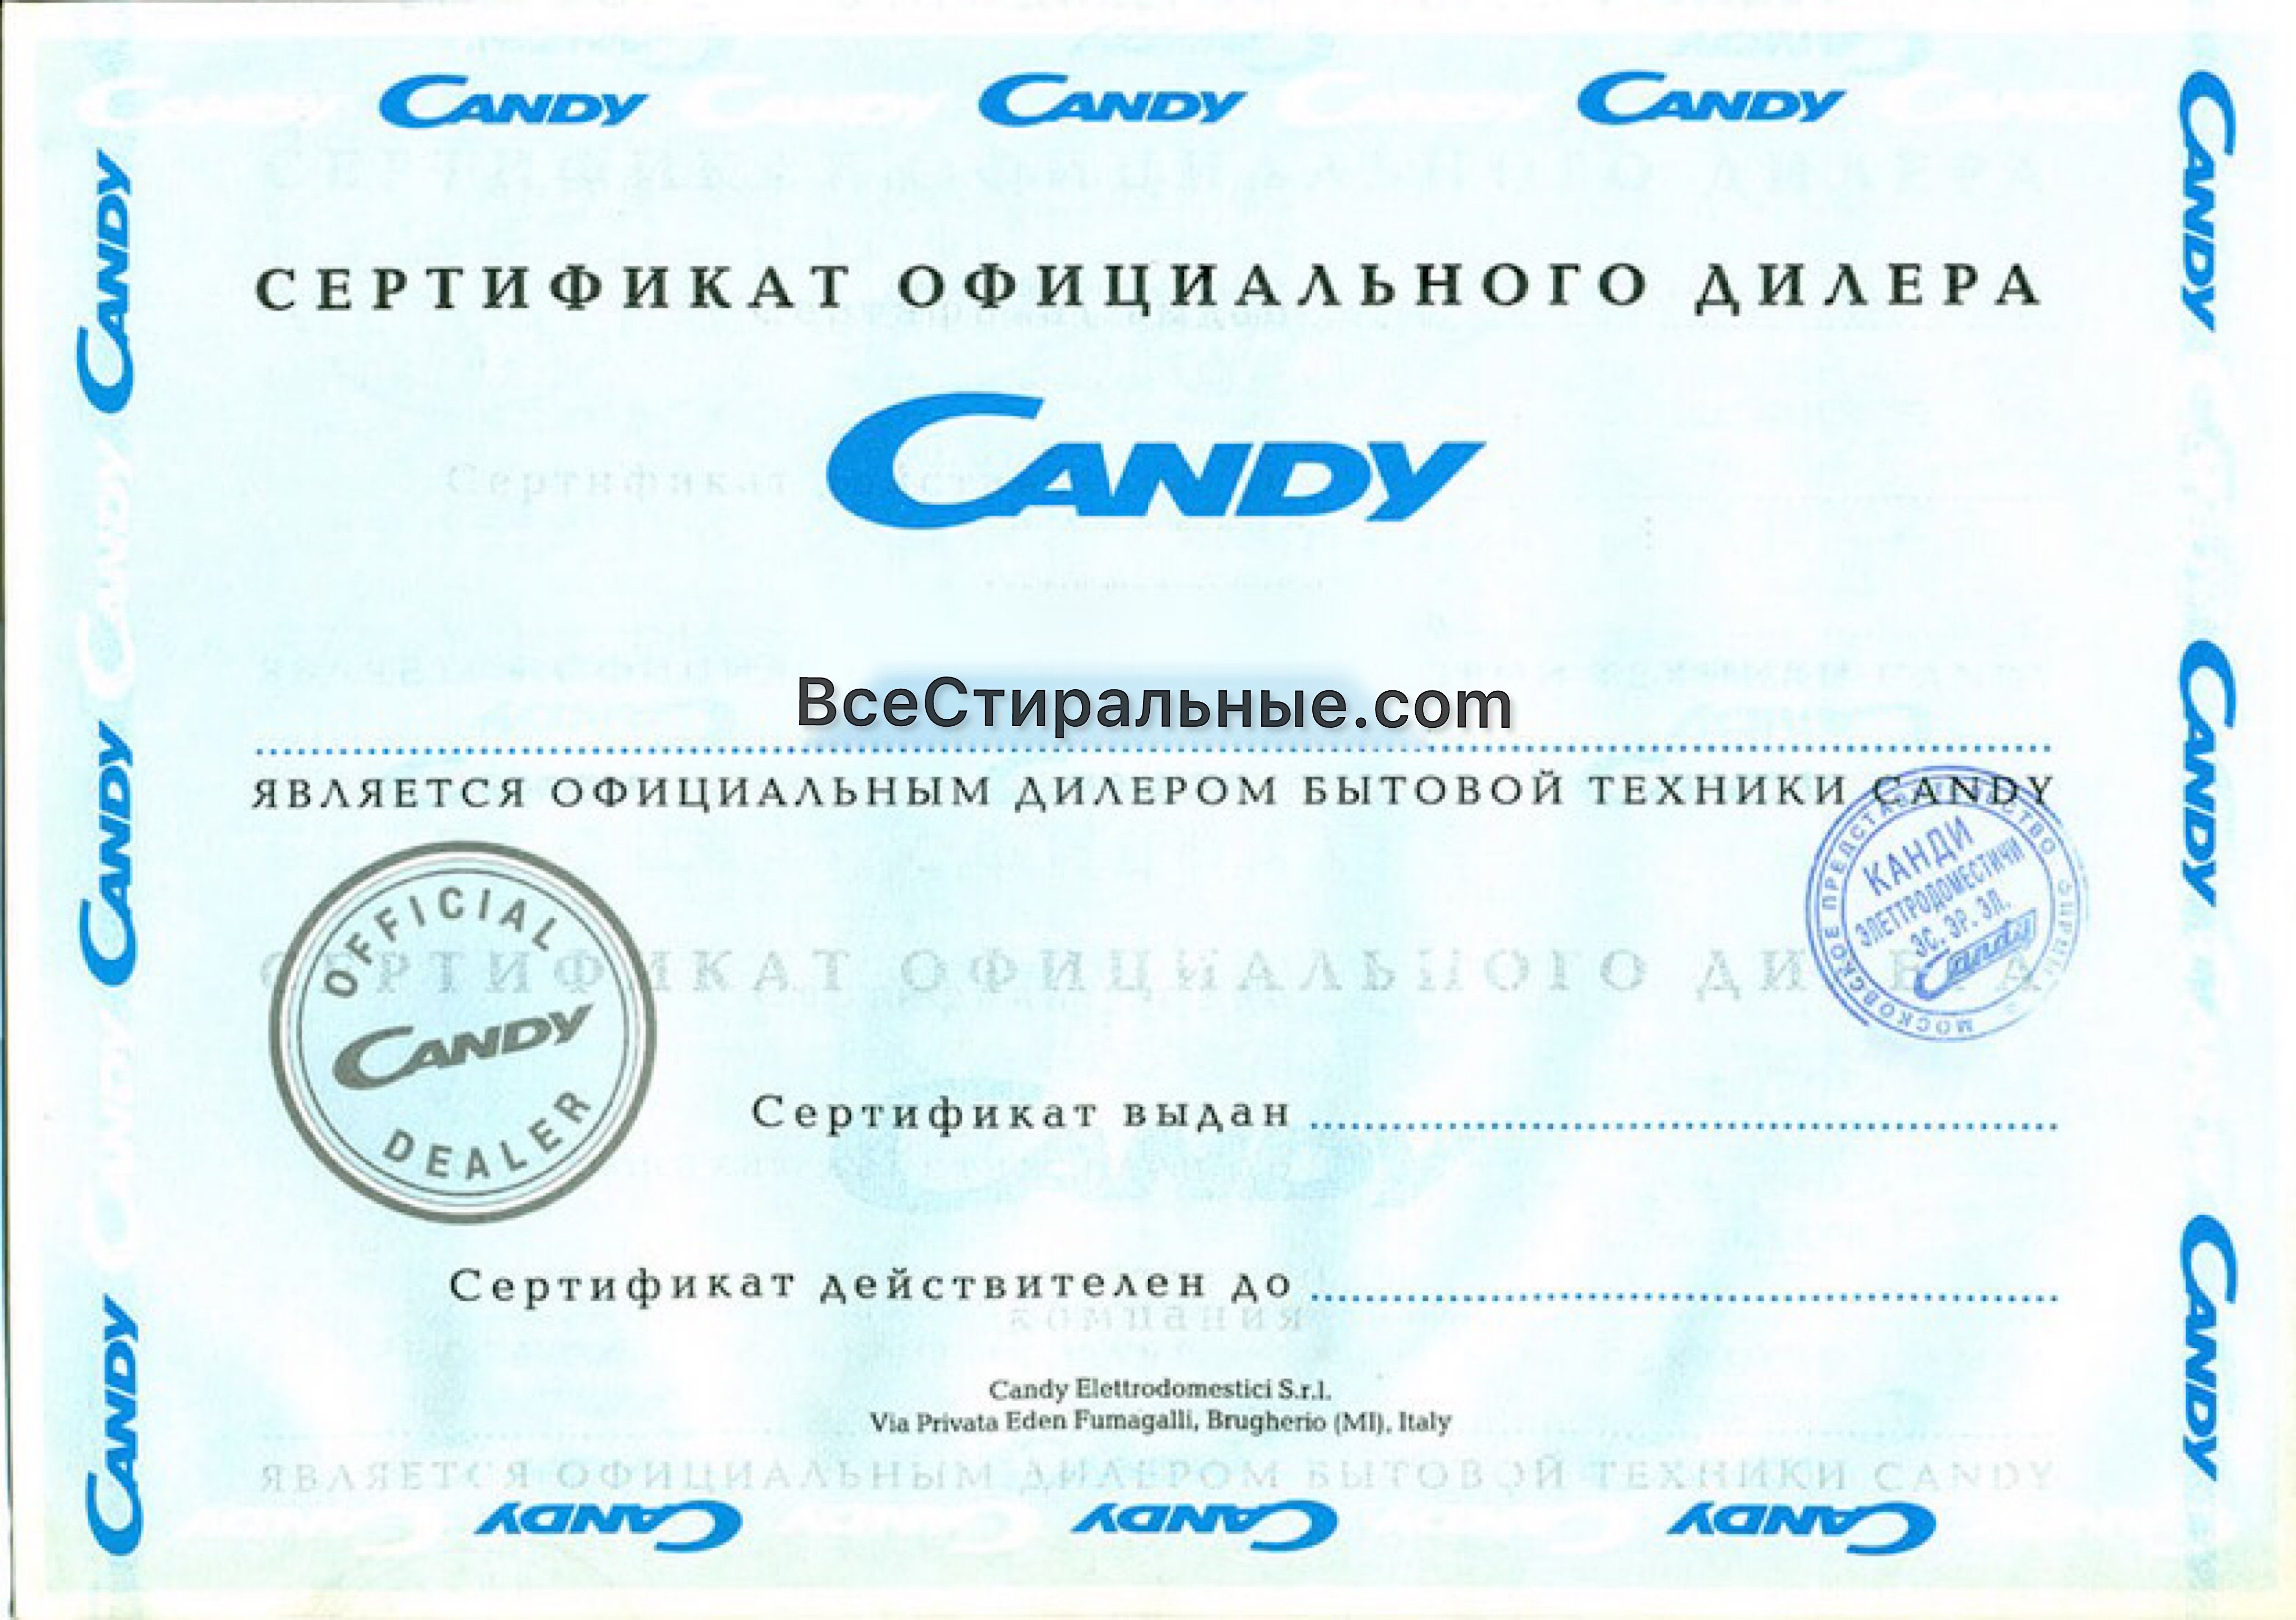 Candy CTD 866